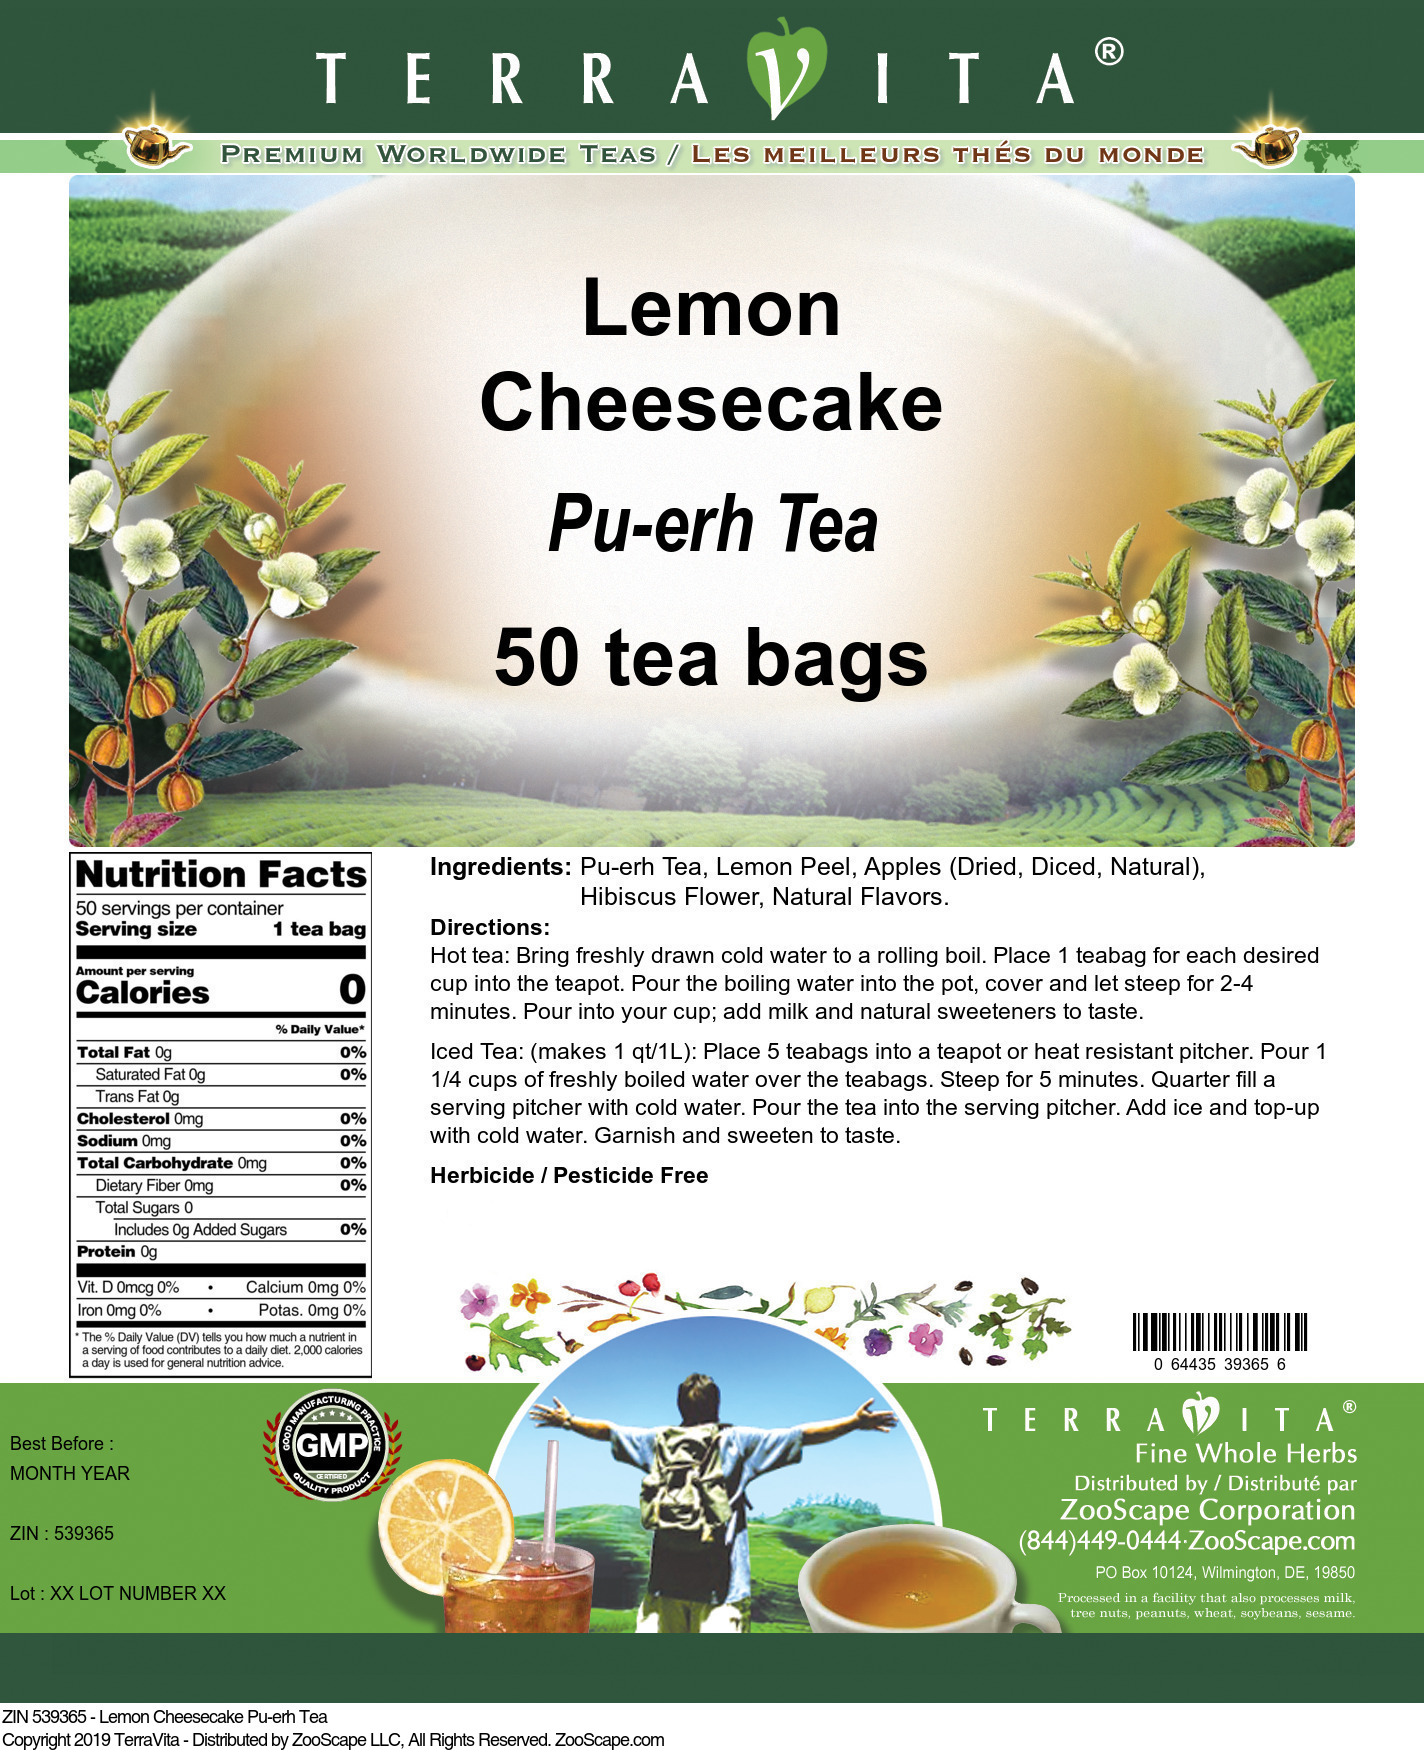 Lemon Cheesecake Pu-erh Tea - Label